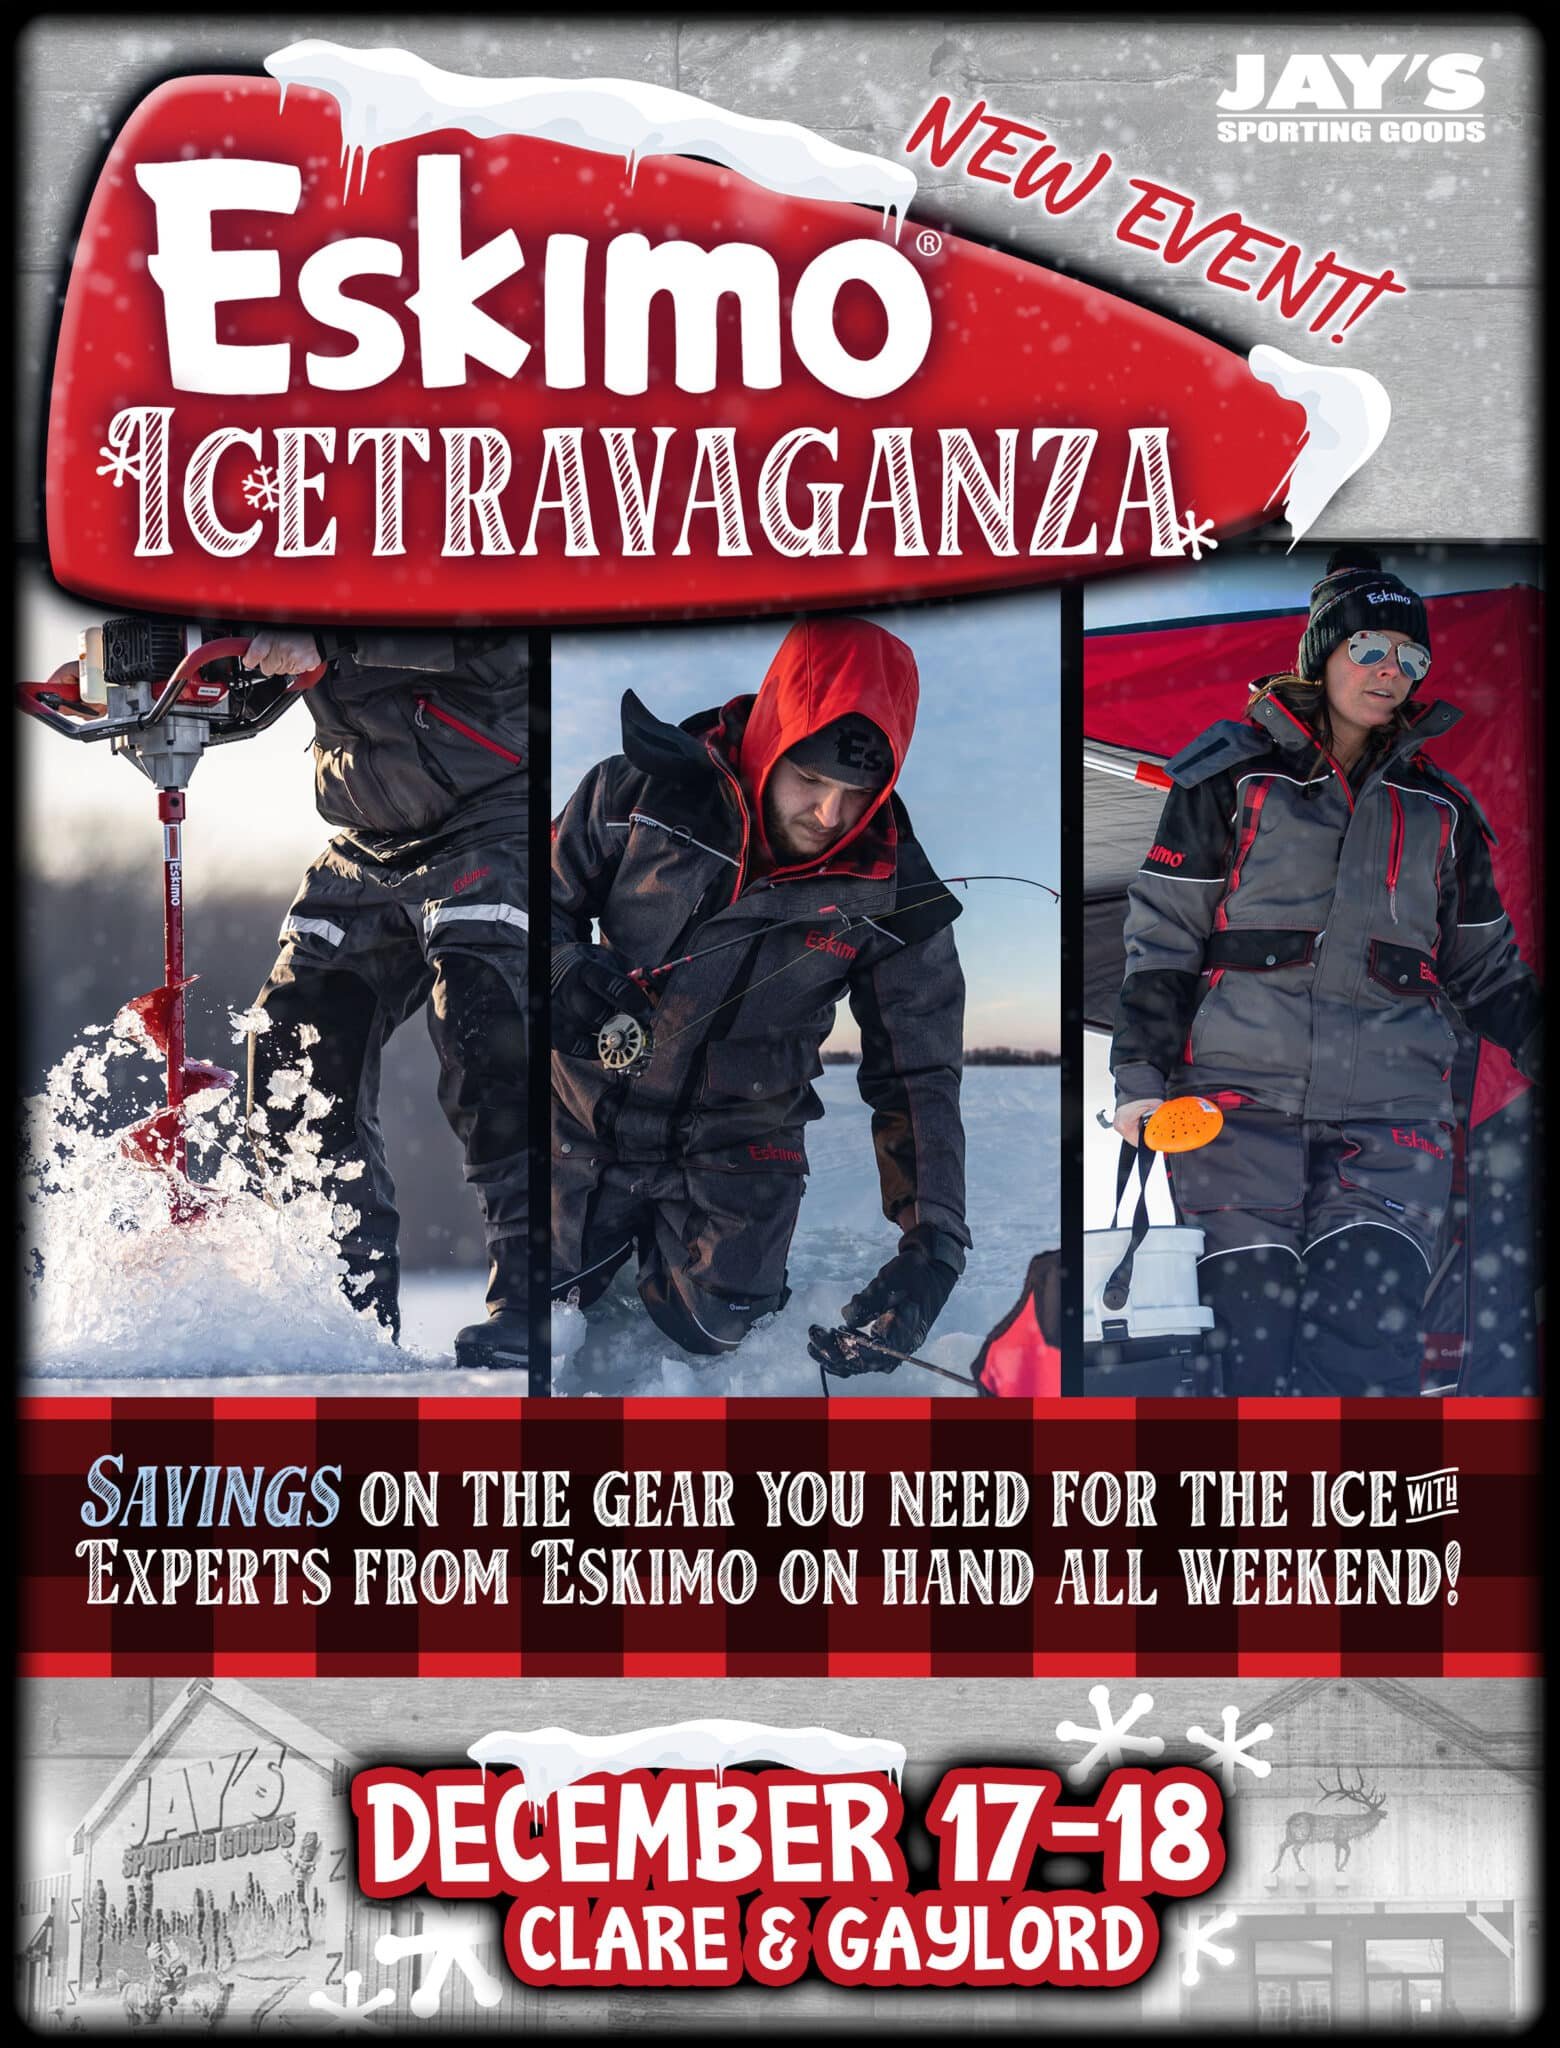 Eskimo Icetravaganza - Jay's Sporting Goods